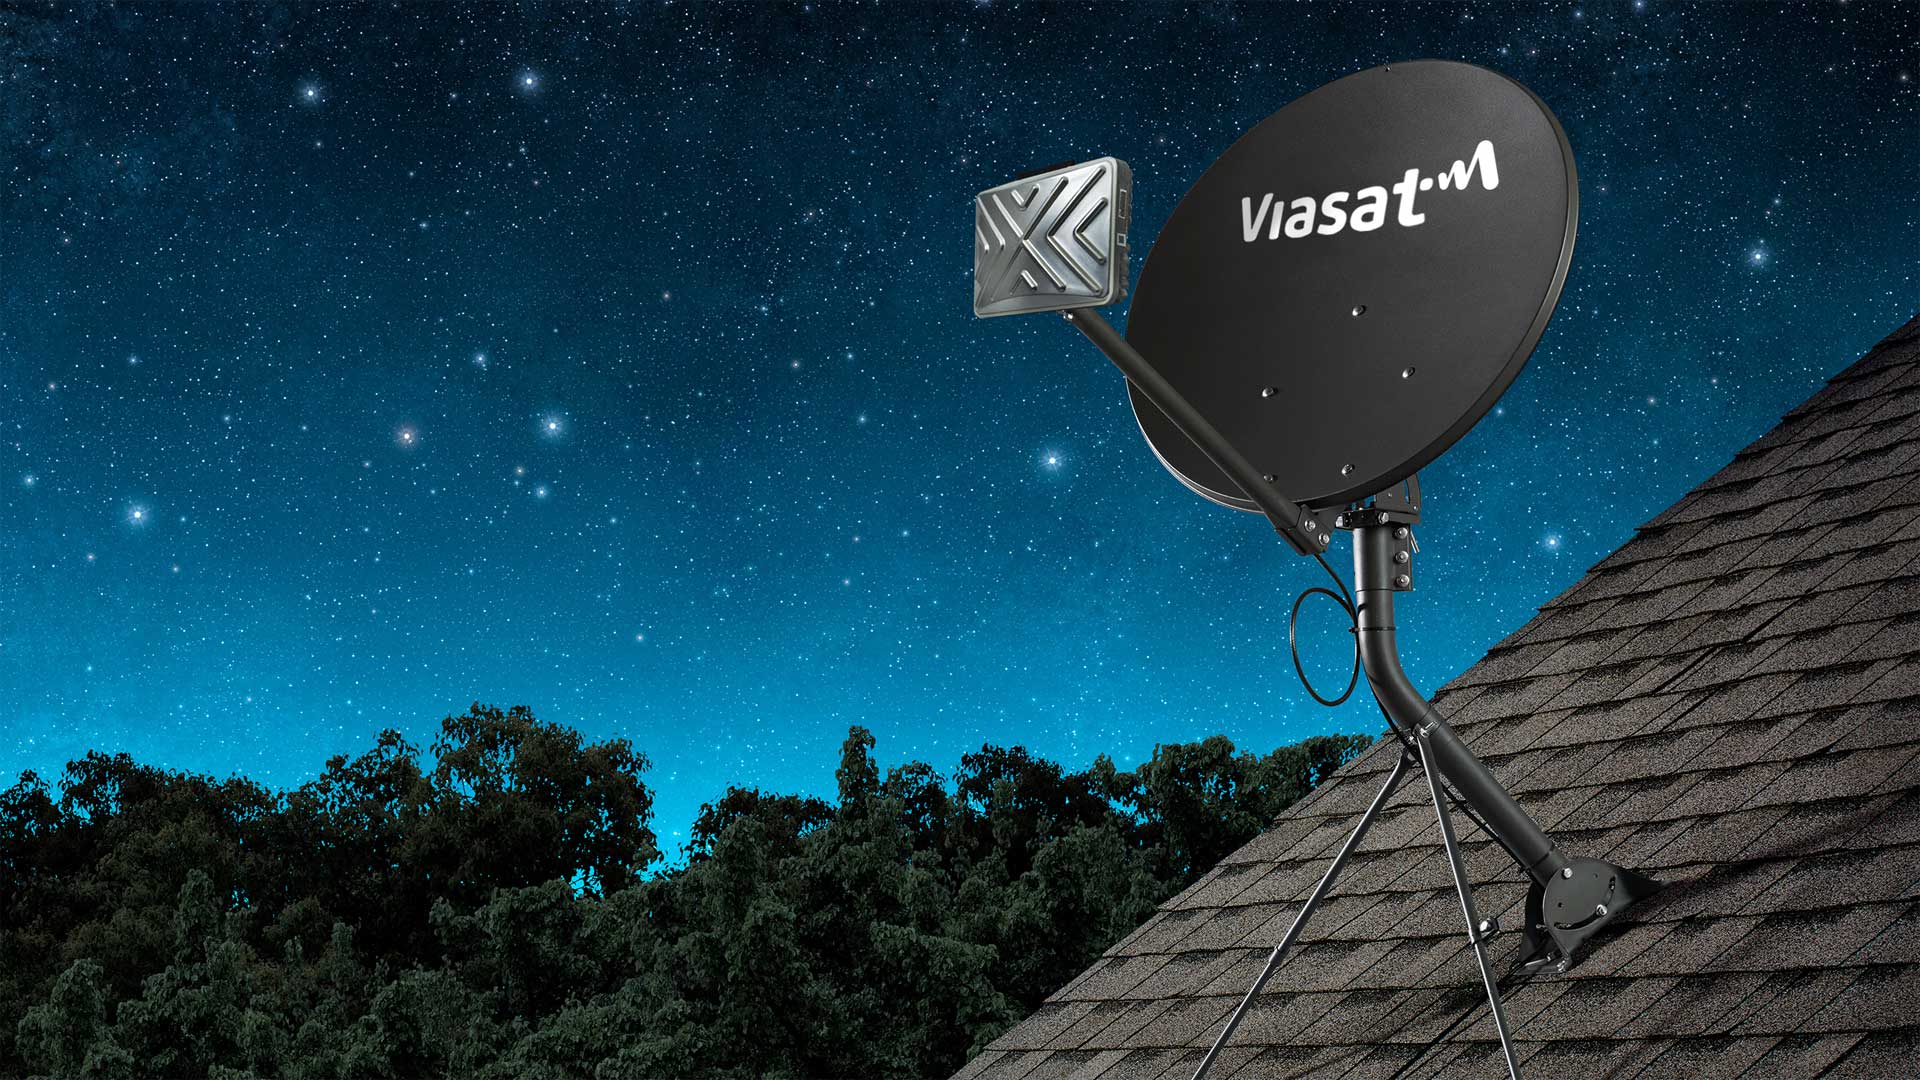 Viasat home satellite internet dish installed on roof